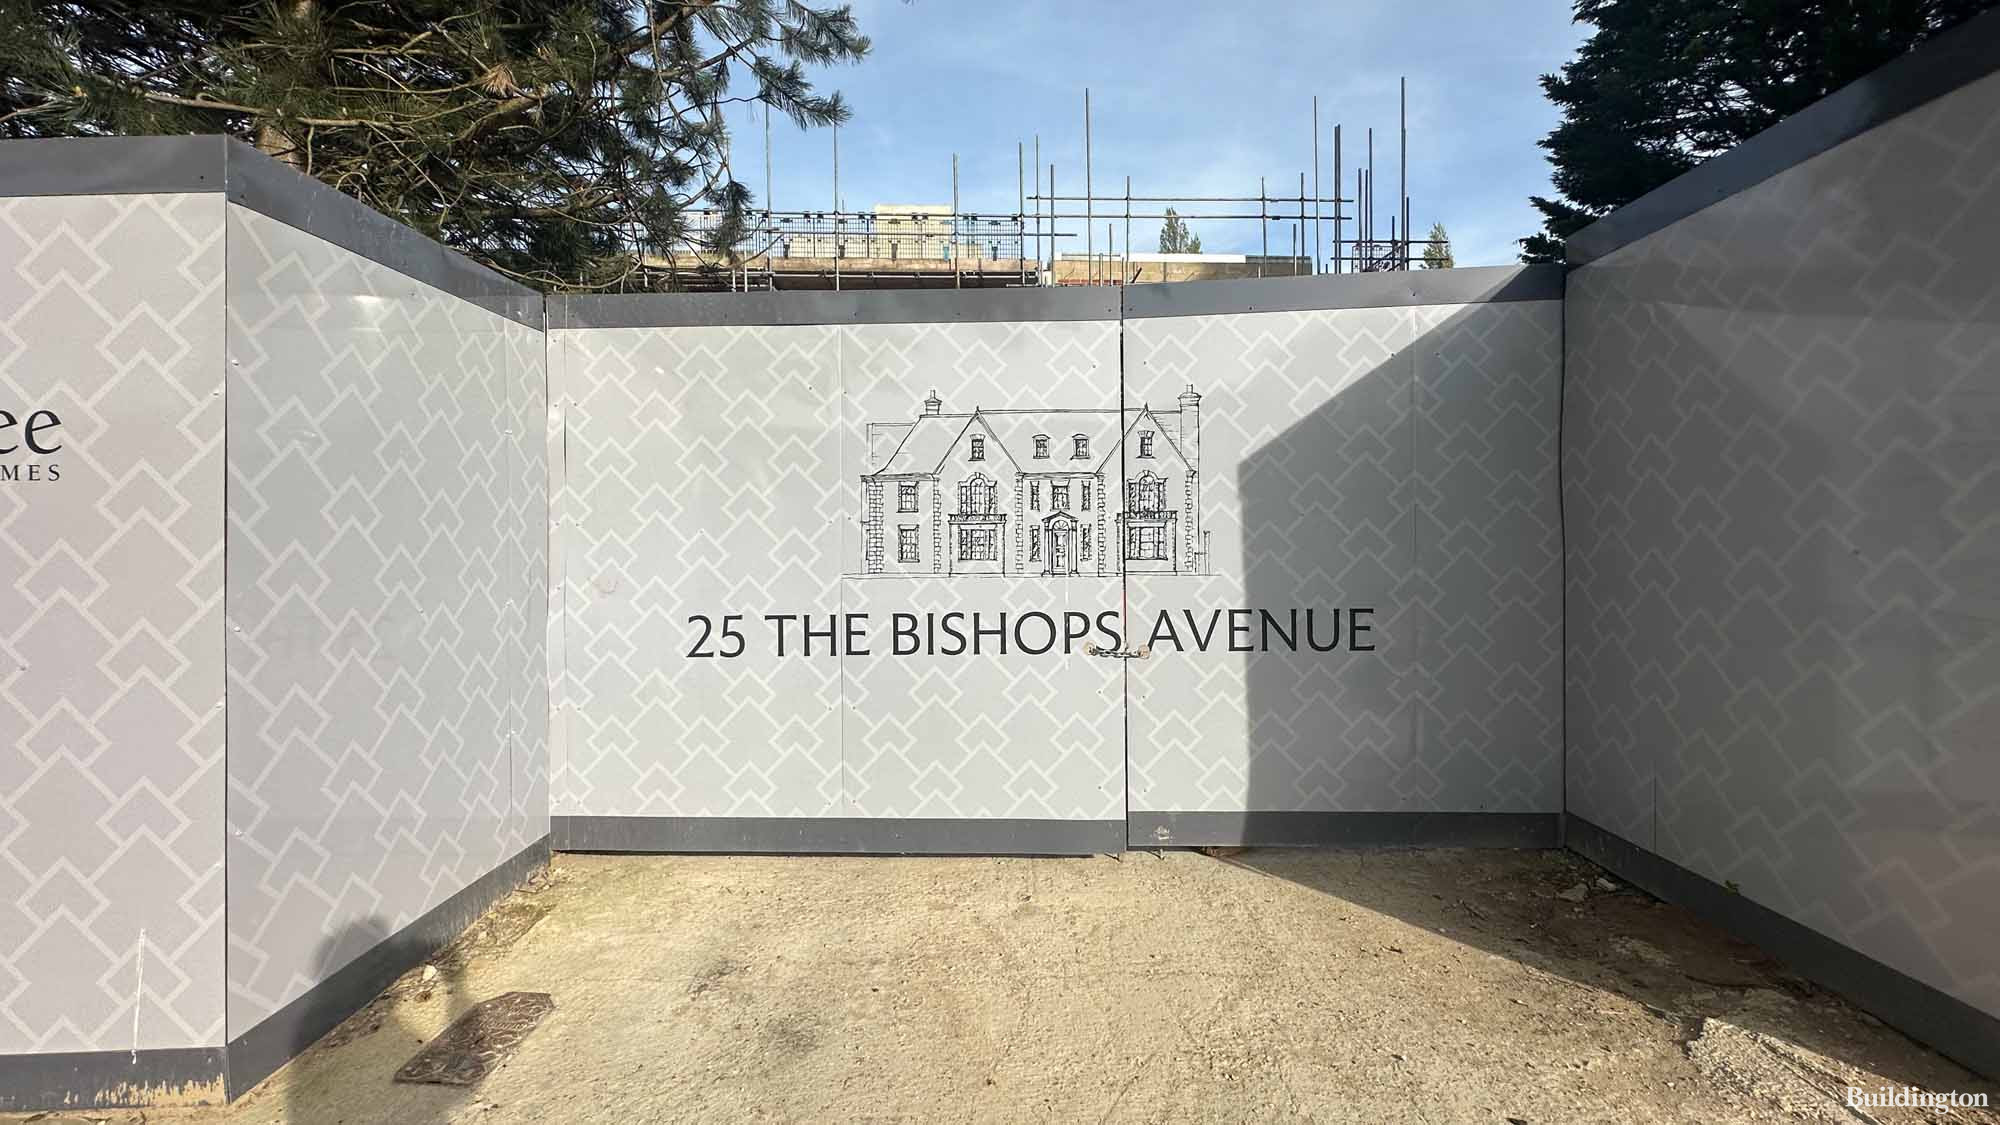 25 The Bishops Avenue development in Hampstead, London N2